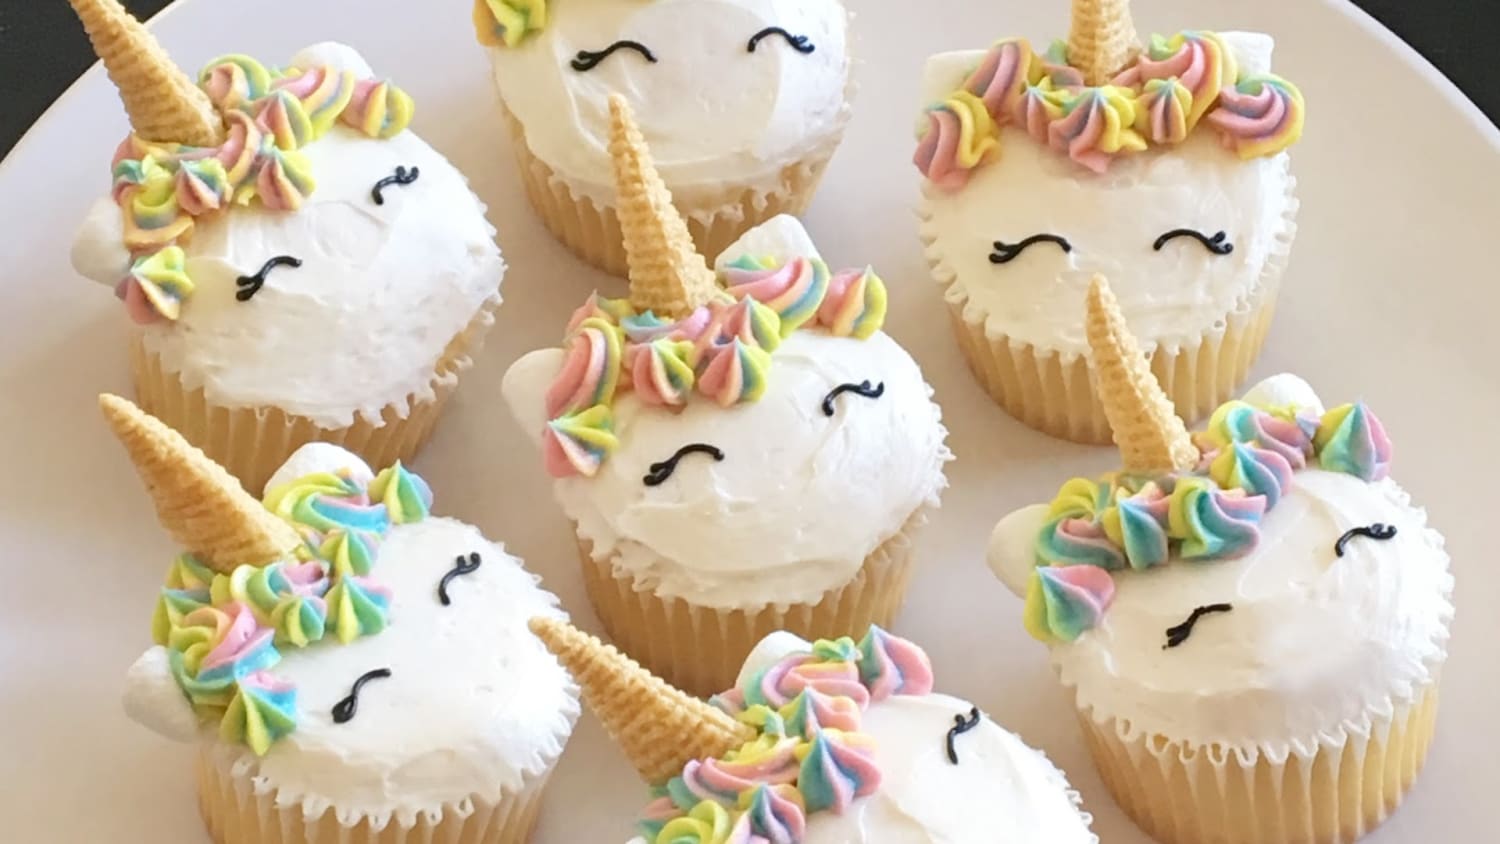 unicorn-cupcakes-today-041918-tease_6078